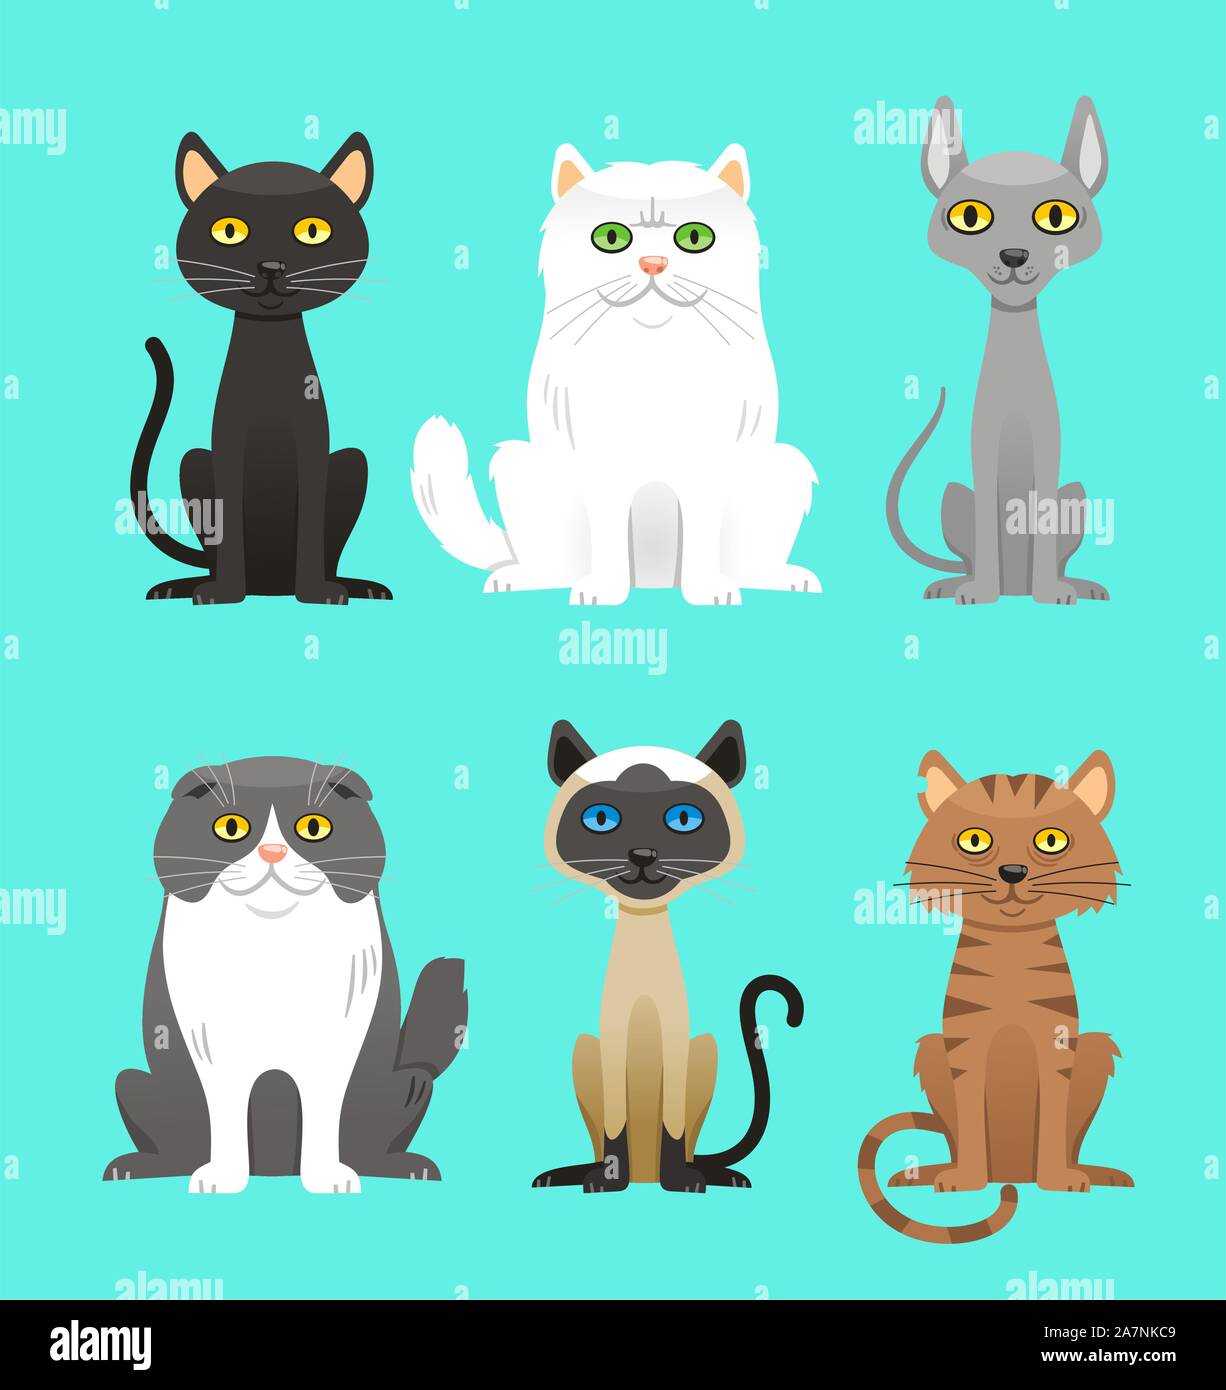 Katze Rasse festgelegt, mit schwarze Katze, weiße Katze, graue Katze, grau-weiße Katze, braun und schwarz Akt, braune Katze. Vektor-Illustration-Cartoon. Stock Vektor